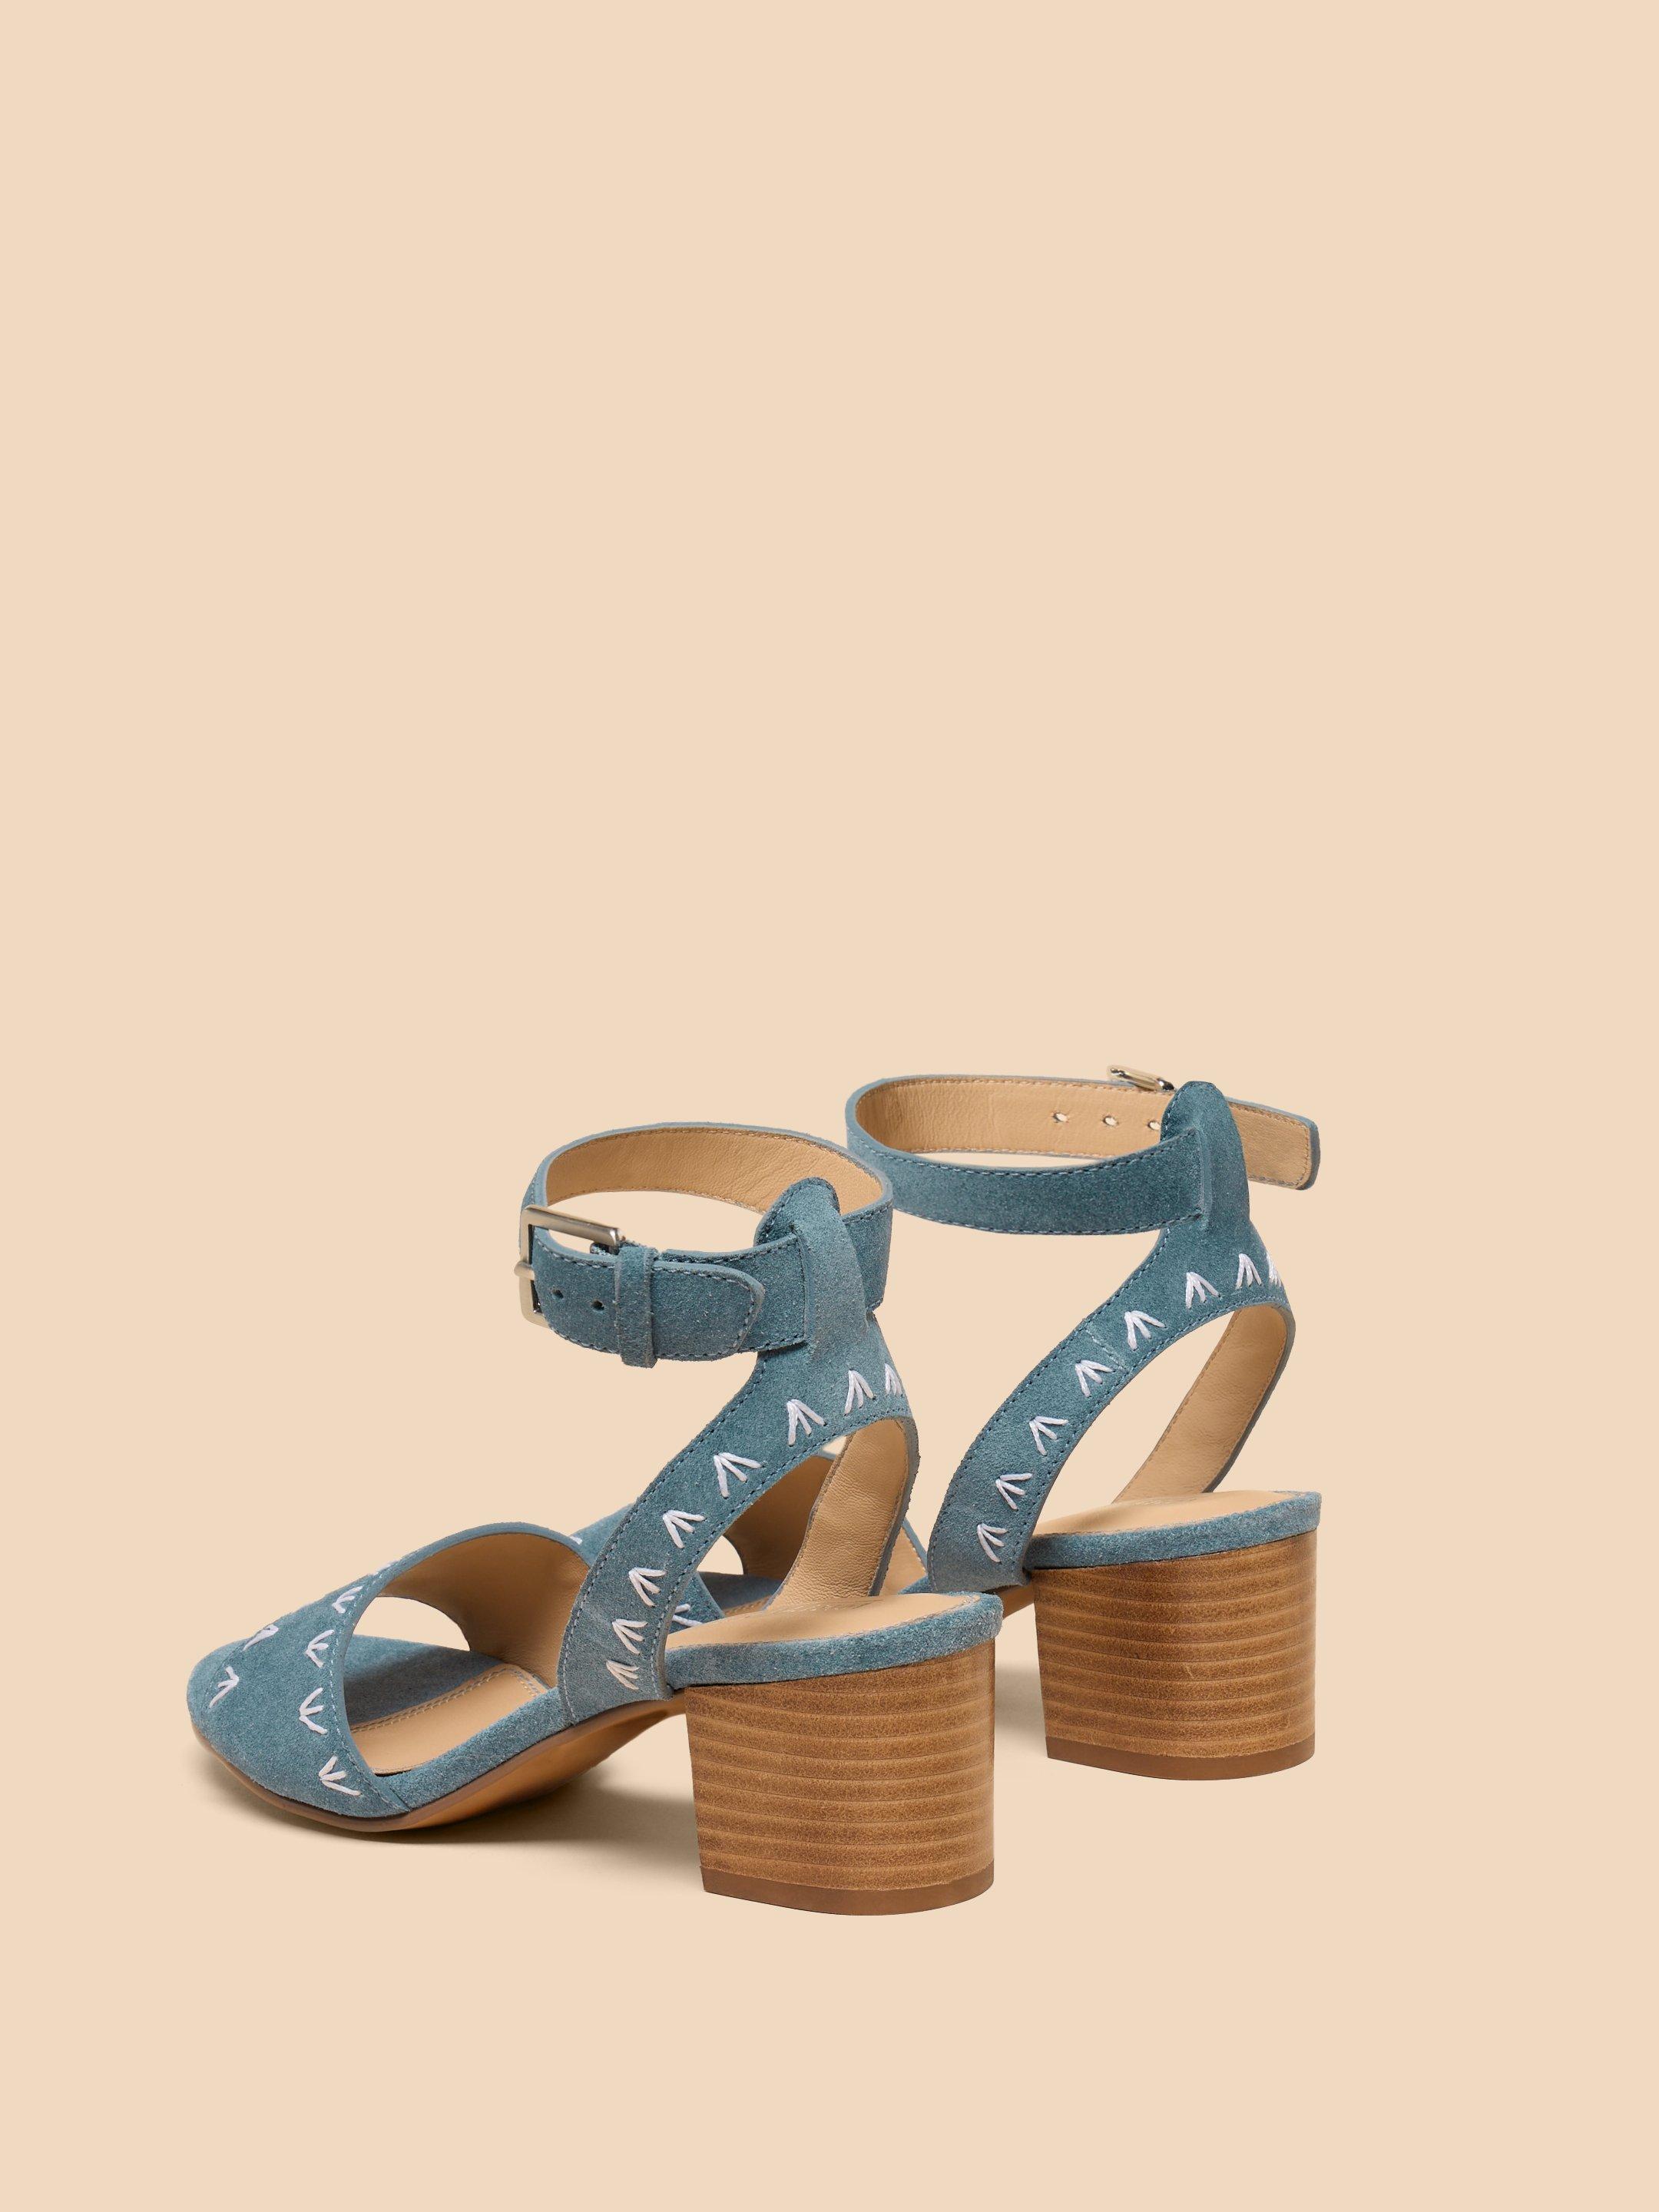 Ivy Suede Heel Sandal in CHAMB BLUE - FLAT BACK